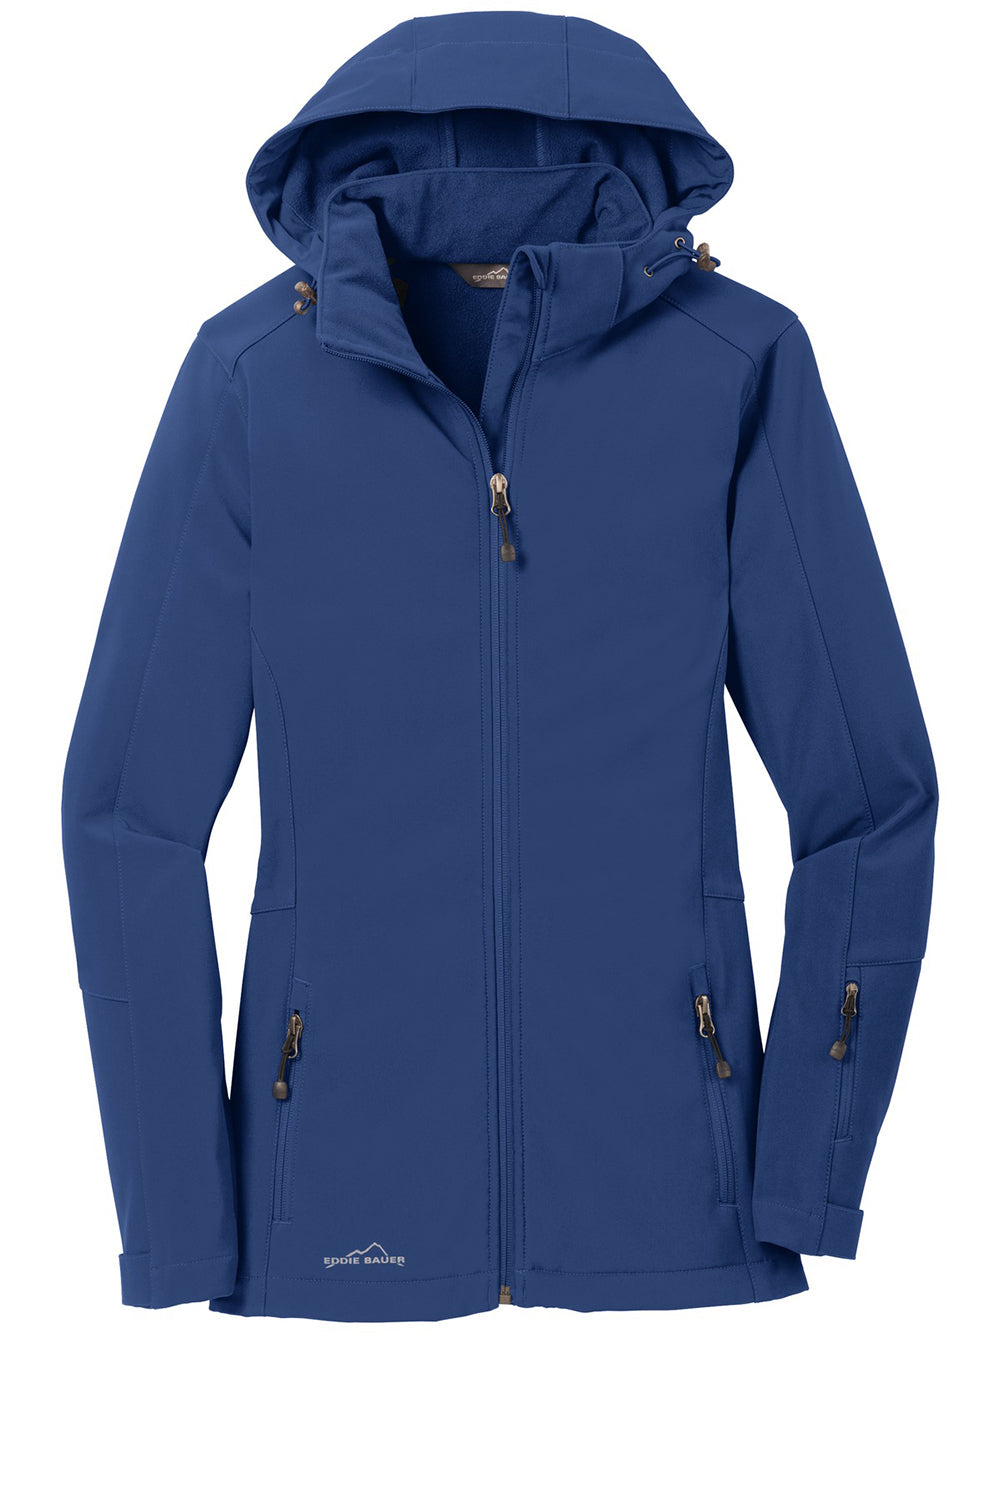 Eddie Bauer EB537 Womens Water Resistant Full Zip Hooded Jacket Admiral Blue Flat Front